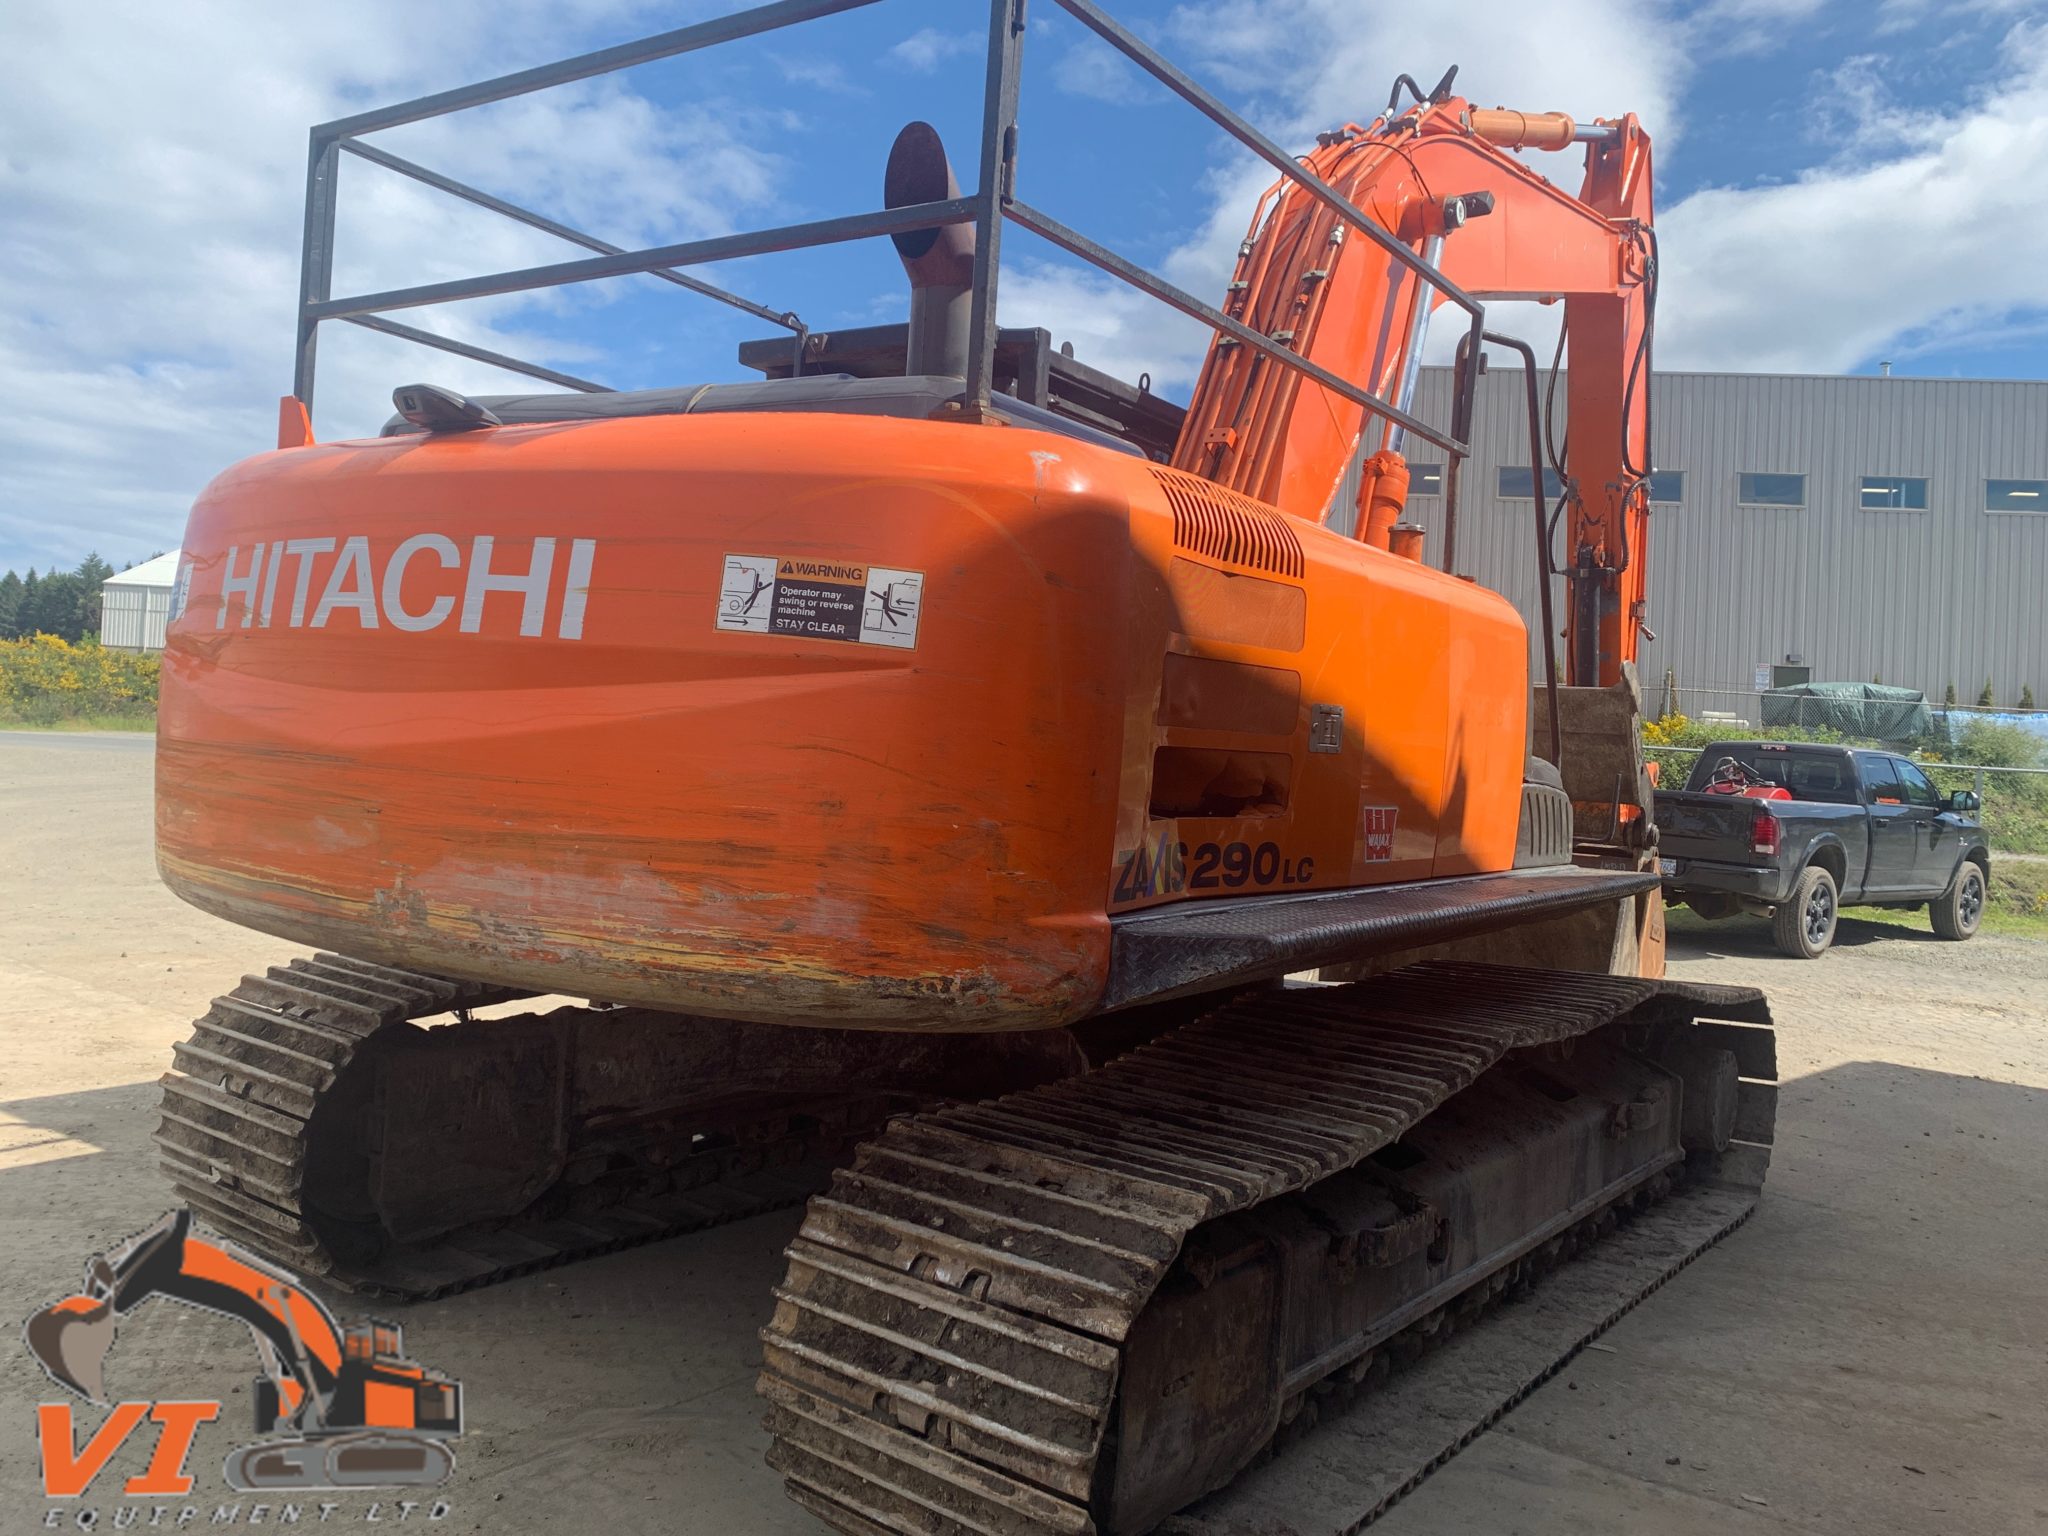 Hitachi ZX290 LC-5 Excavator | VI Equipment Ltd.